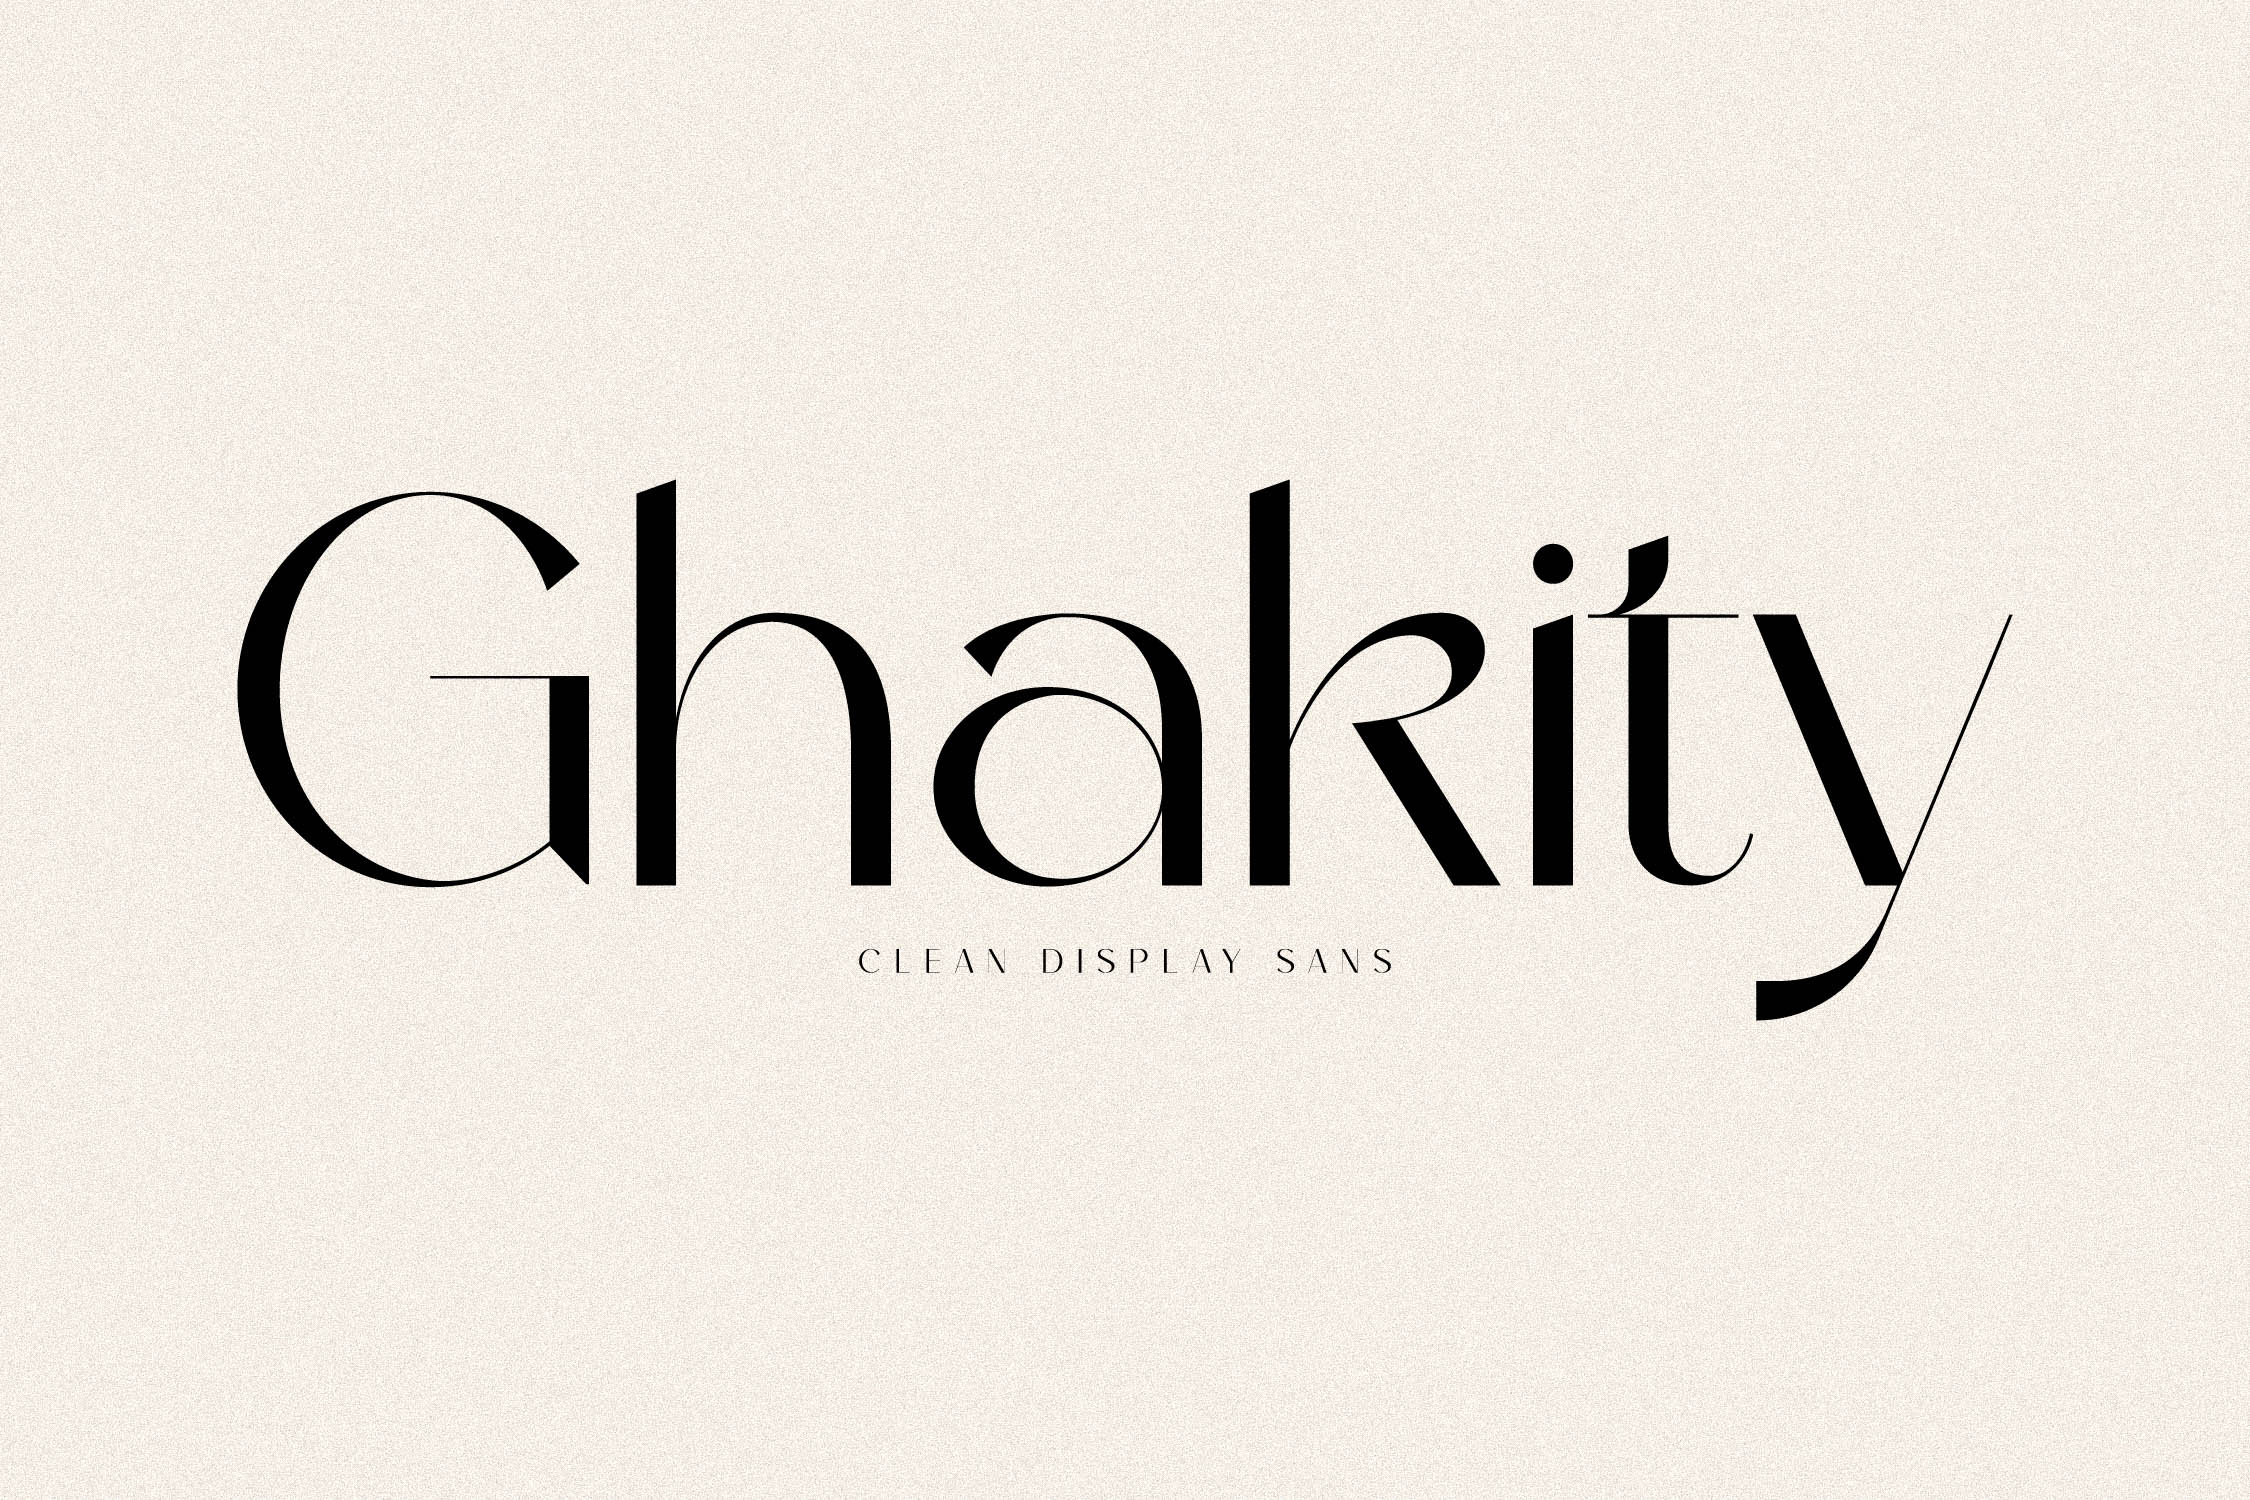 Ghakity